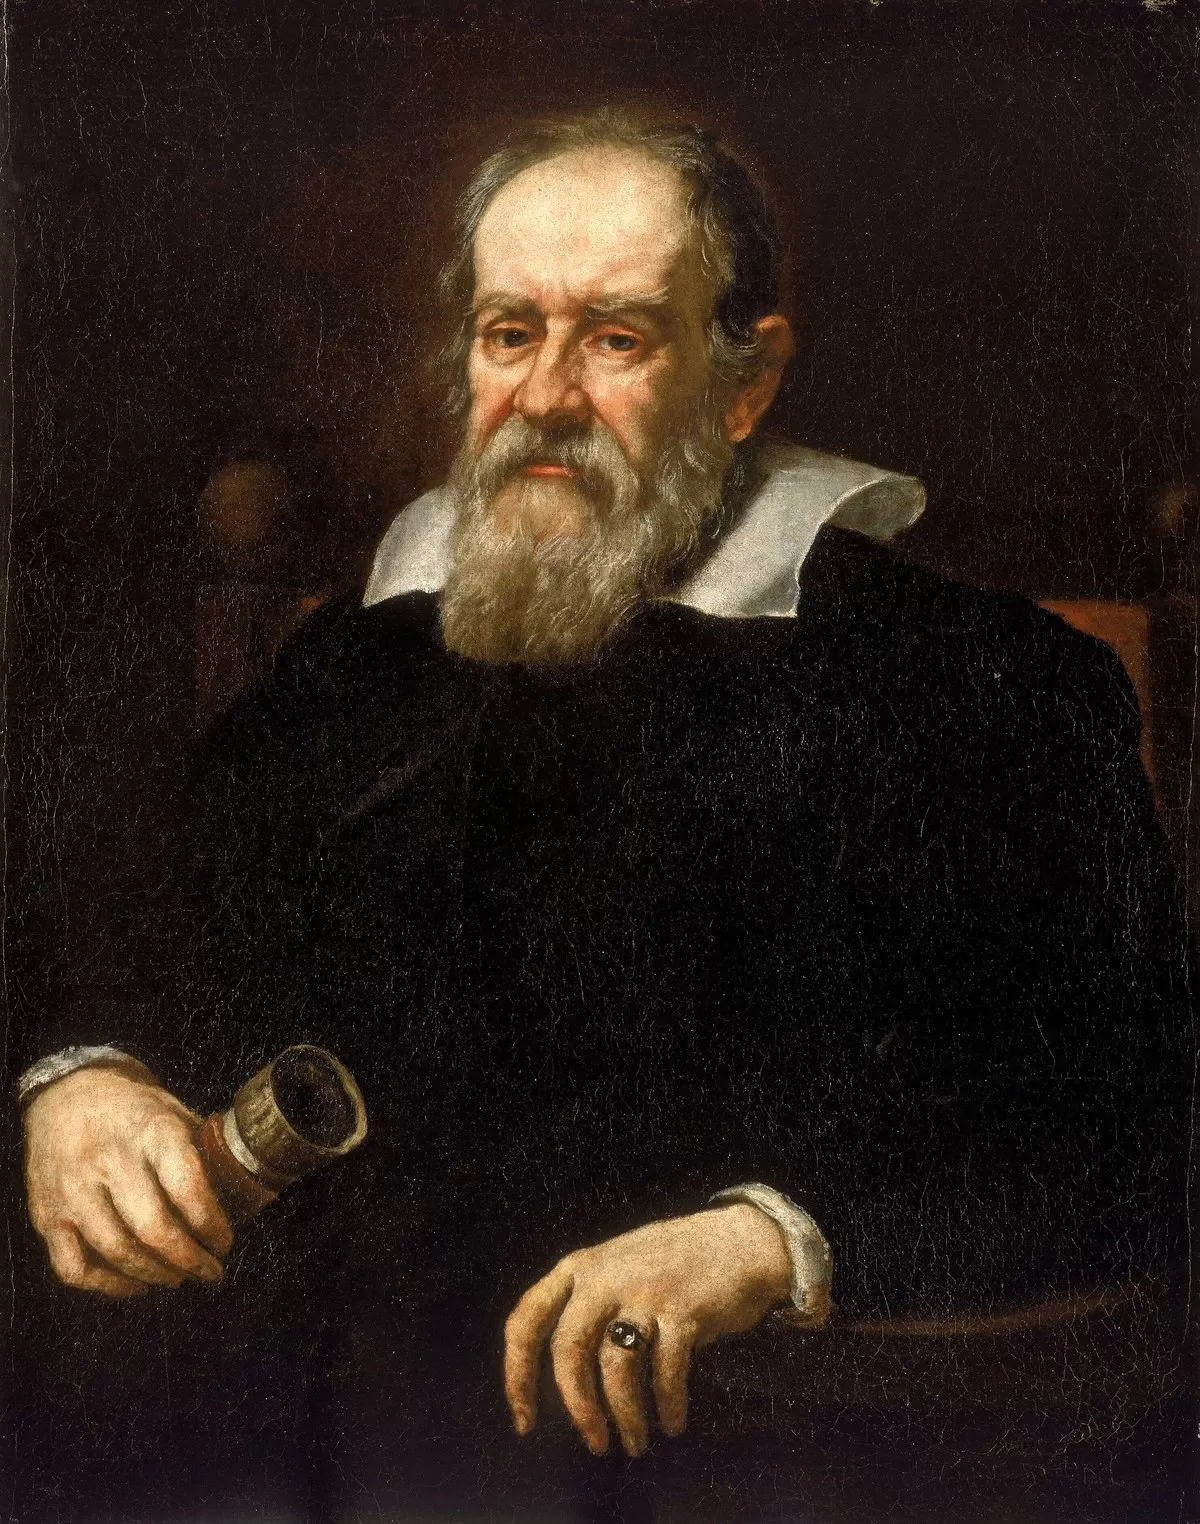 Foto Galileo Galilei